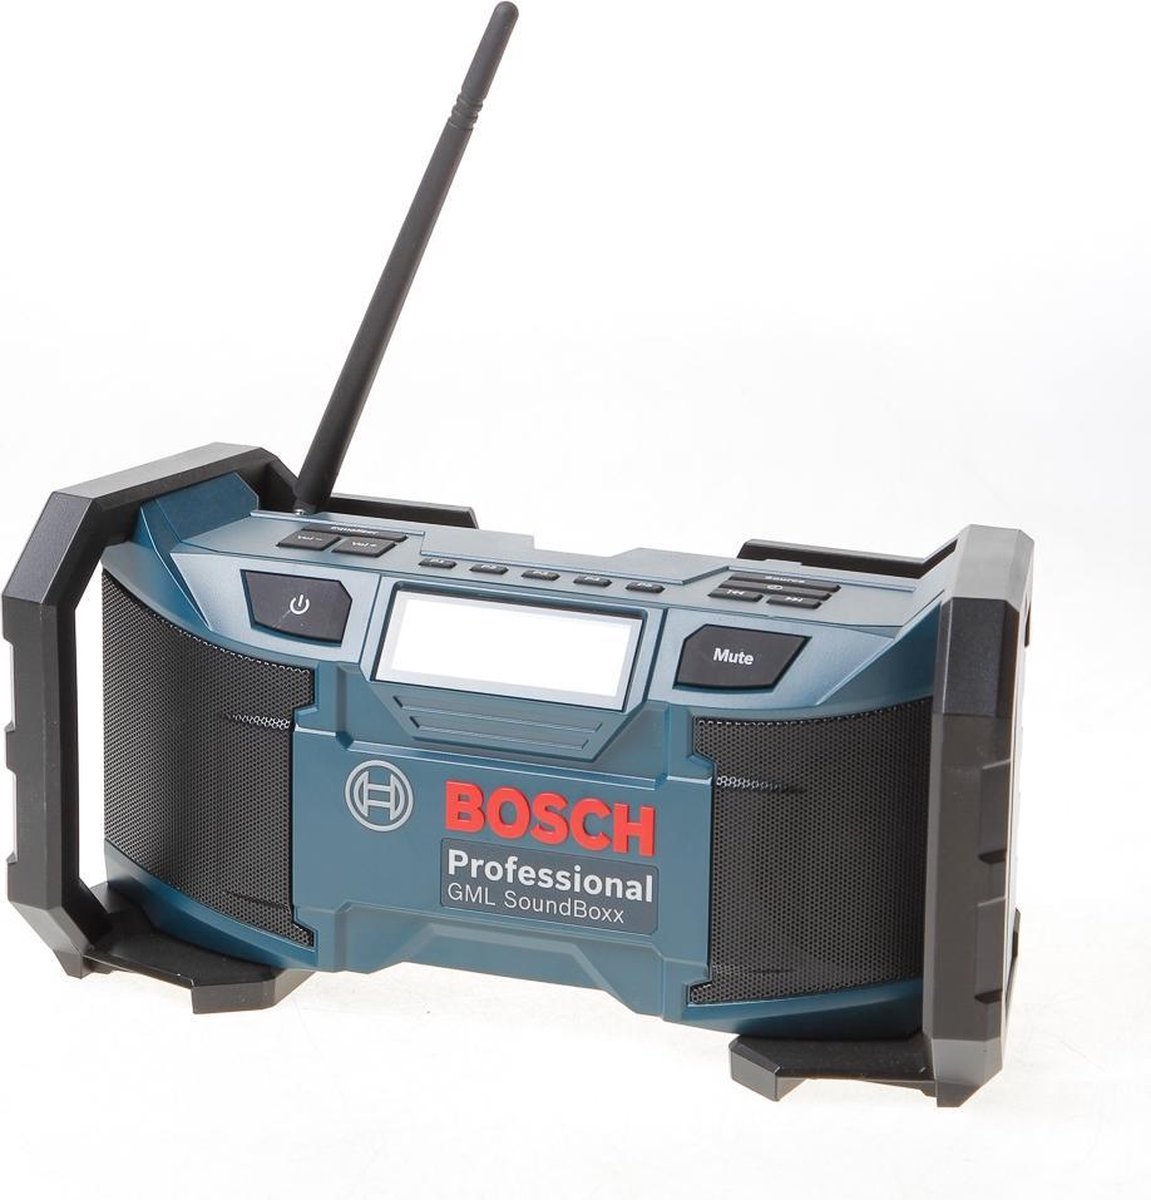 Bosch GML SoundBoxx Professional Zwart, Blauw radio | bol.com